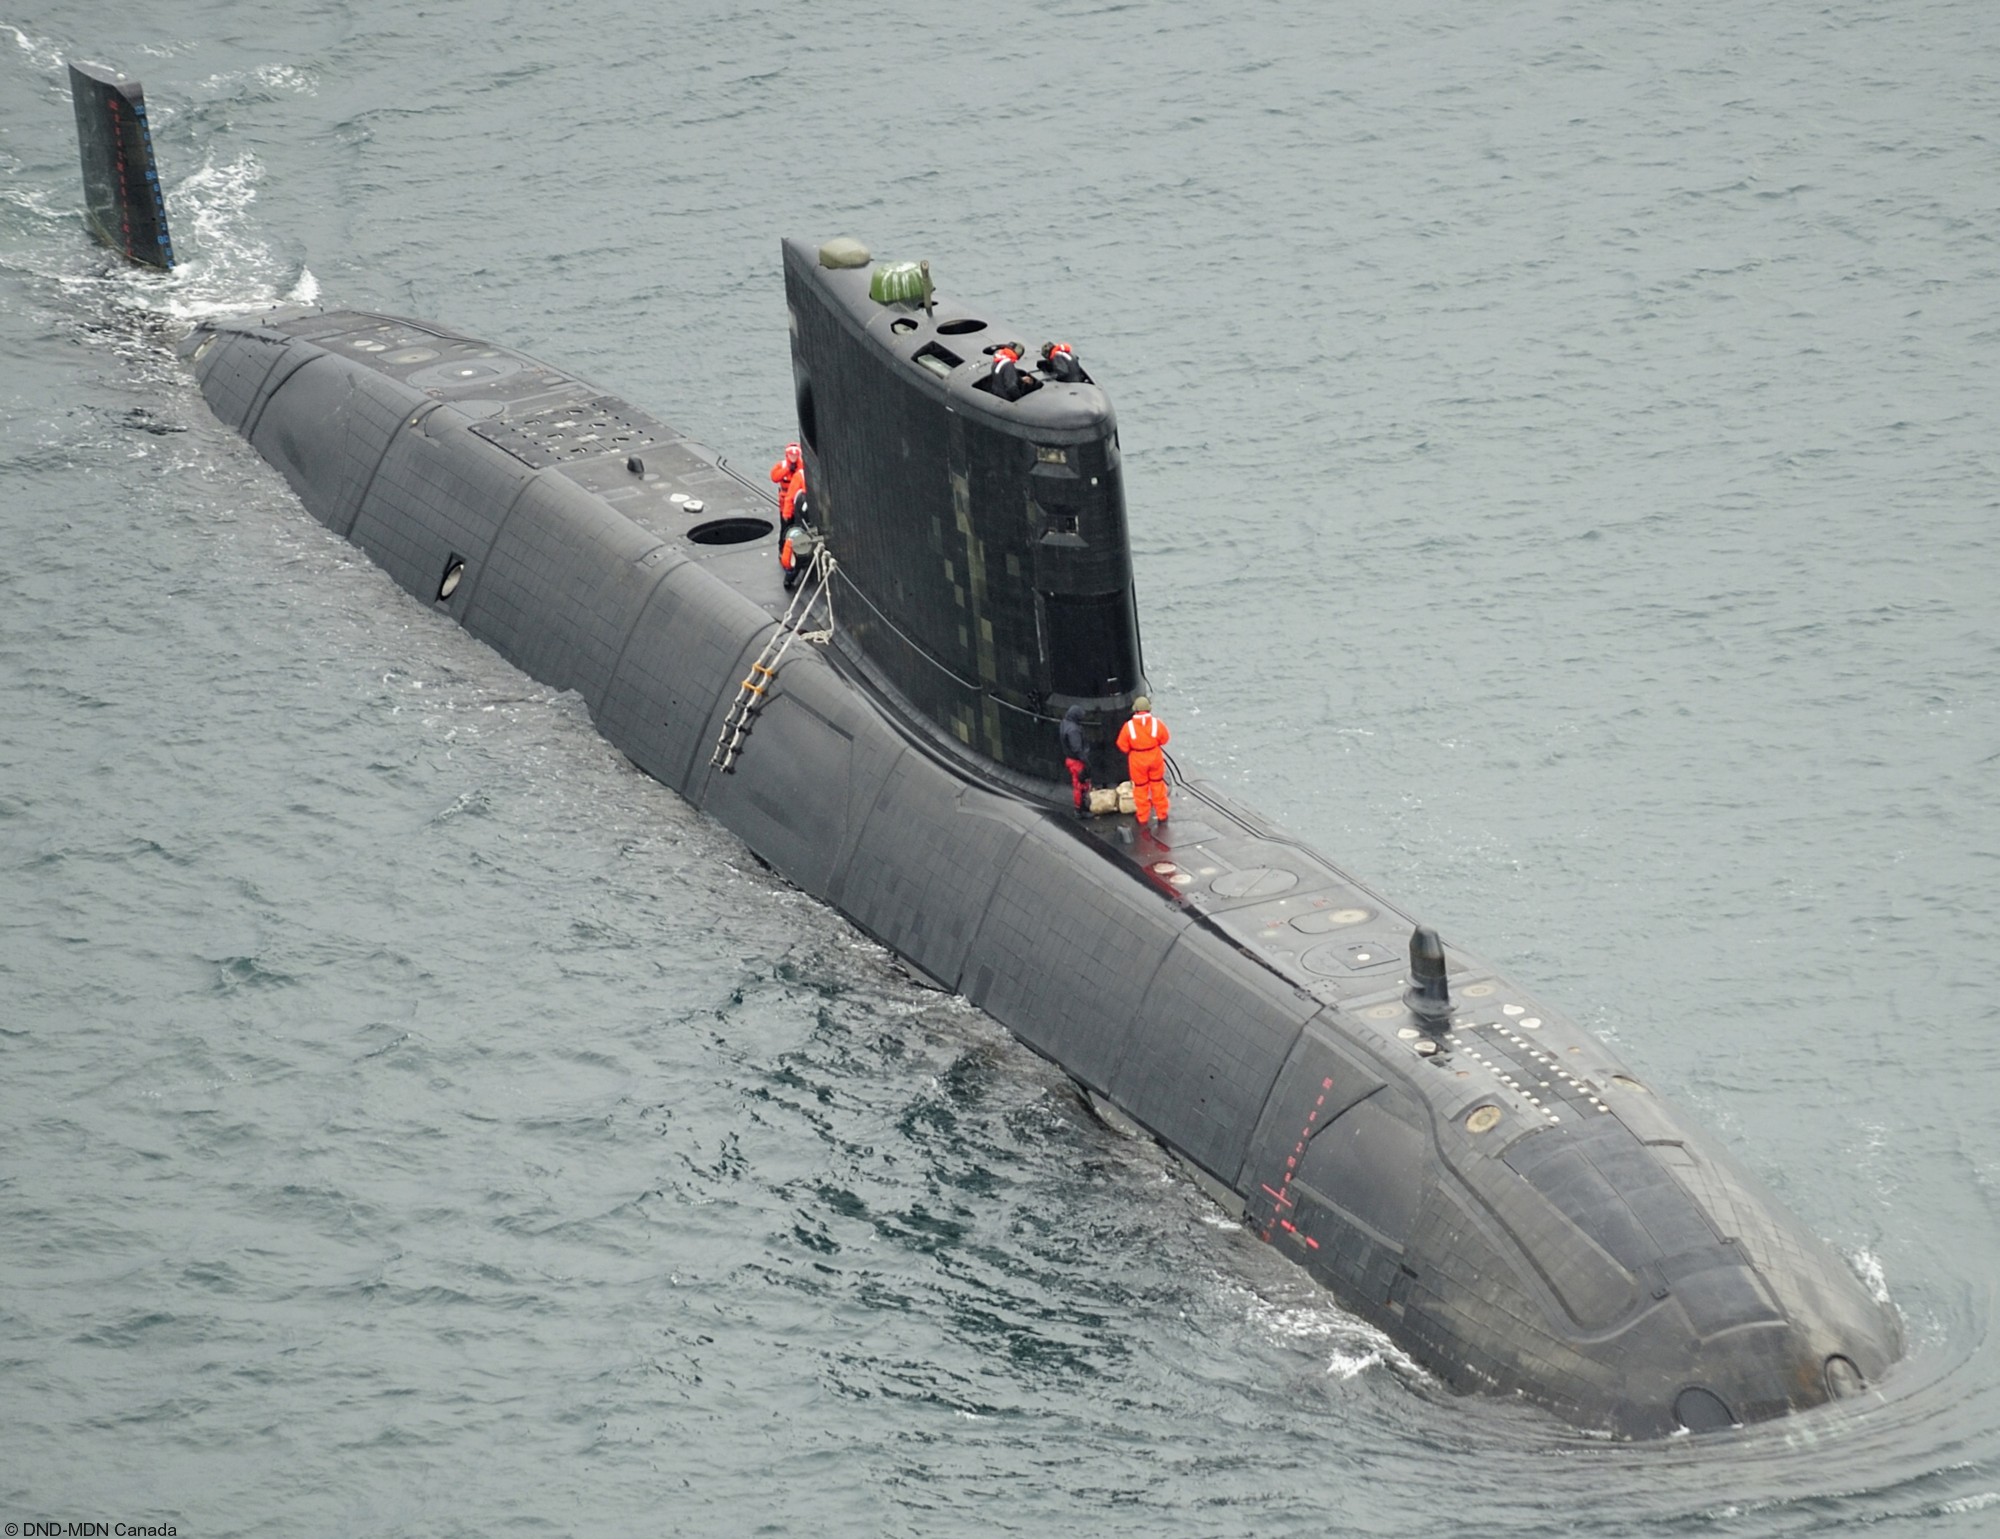 ssk-876 hmcs victoria upholder class attack submarine hunter killer ncsm royal canadian navy 33